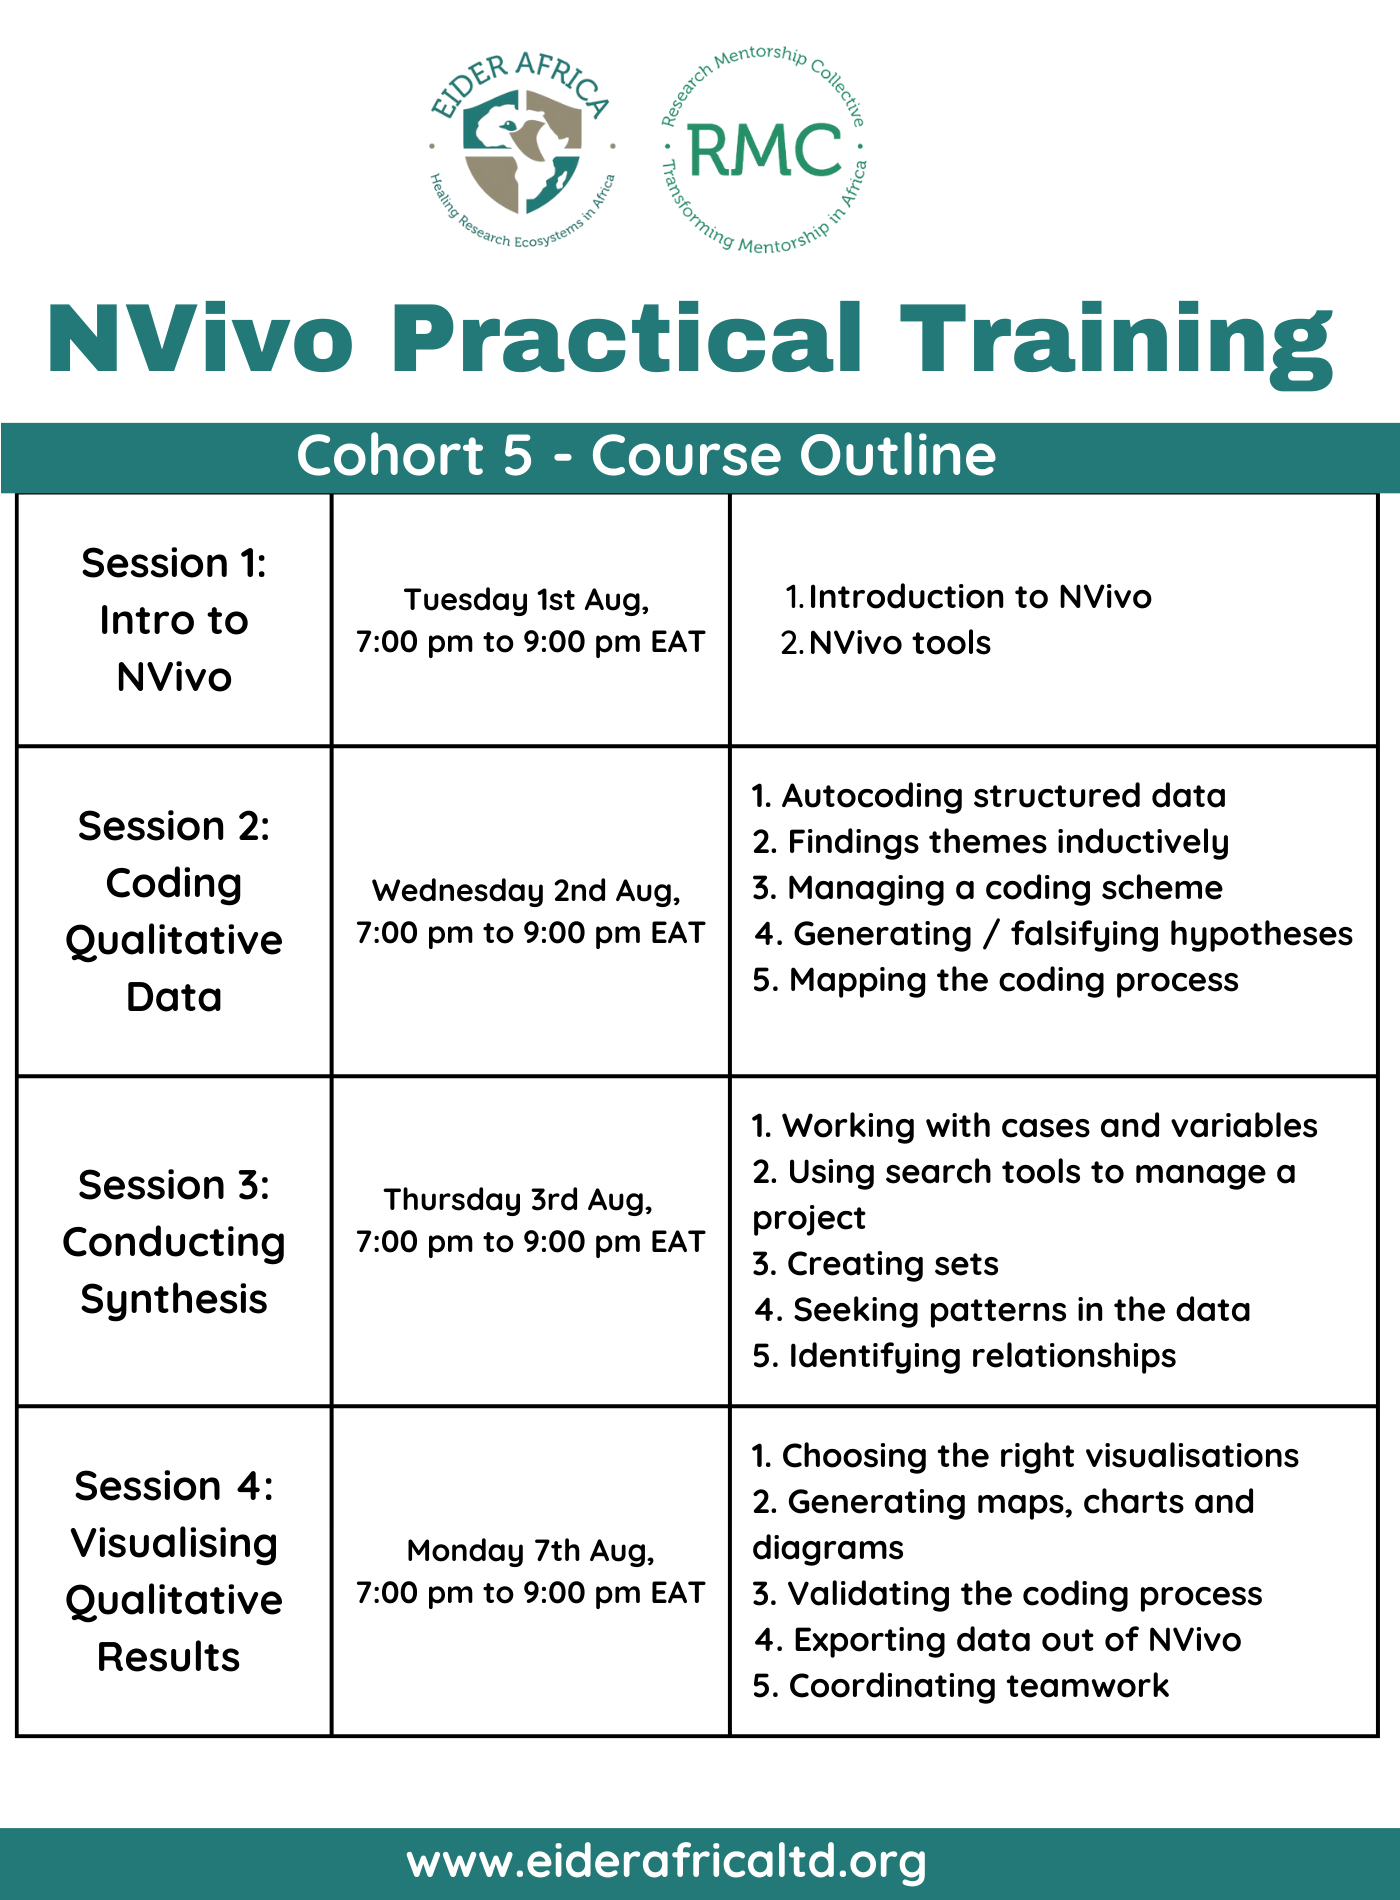 NVivo Cohort 5 Course Outline